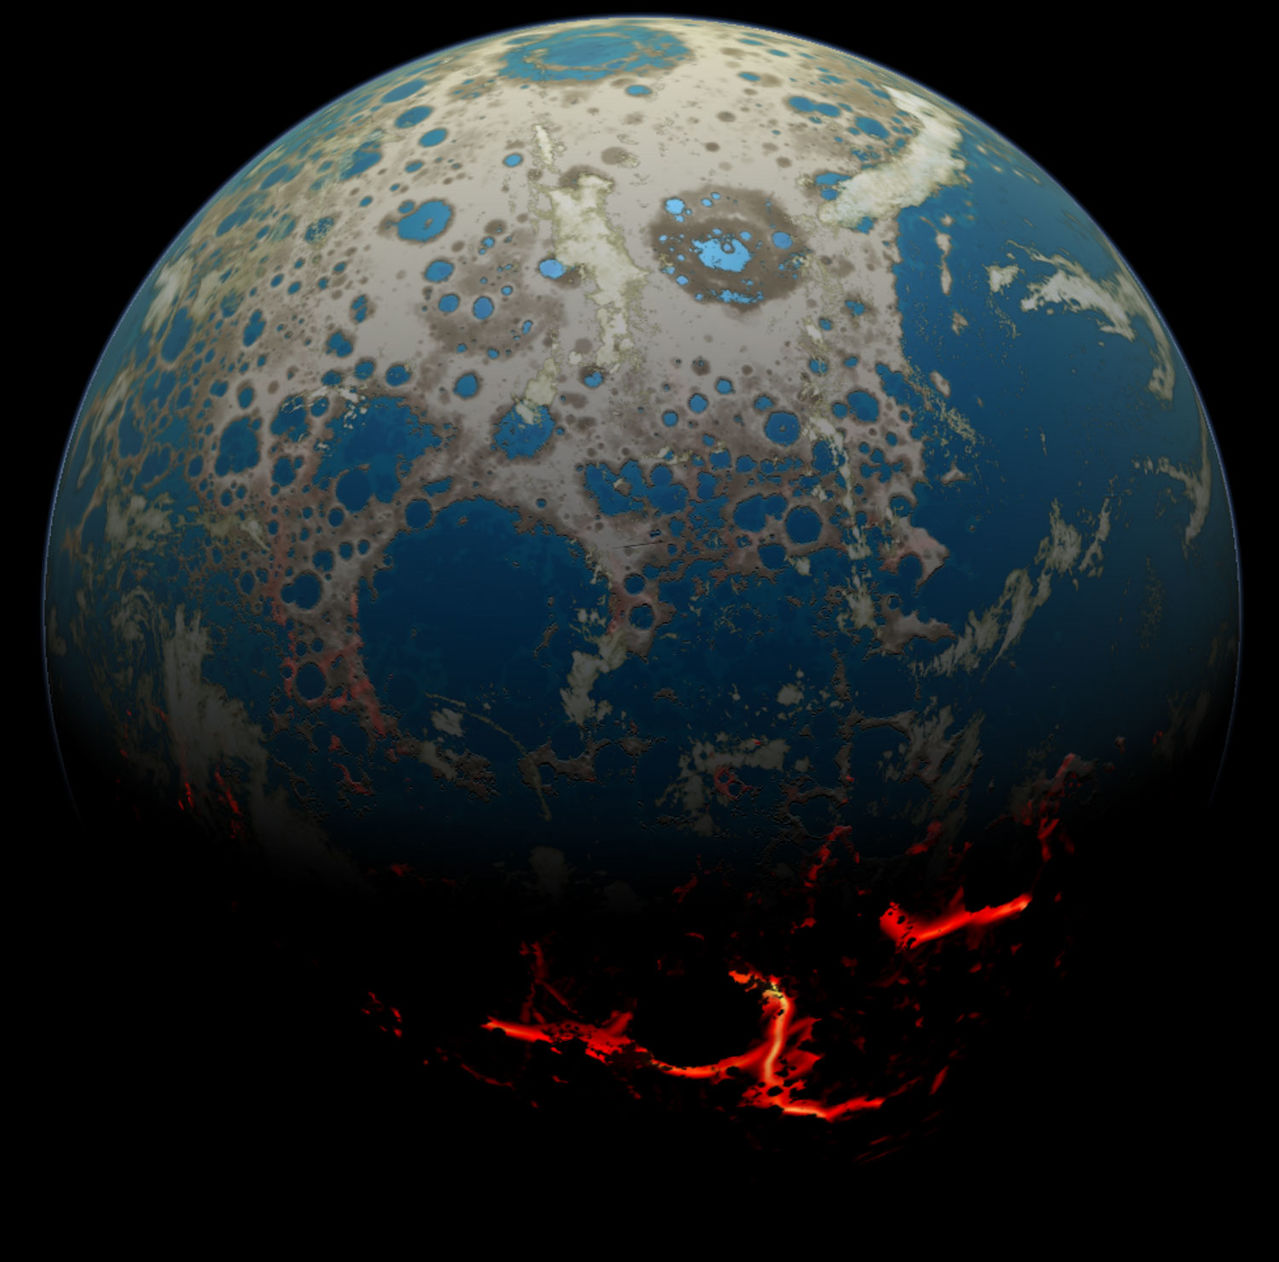 Earth 4 billion years ago during the Hadean eon